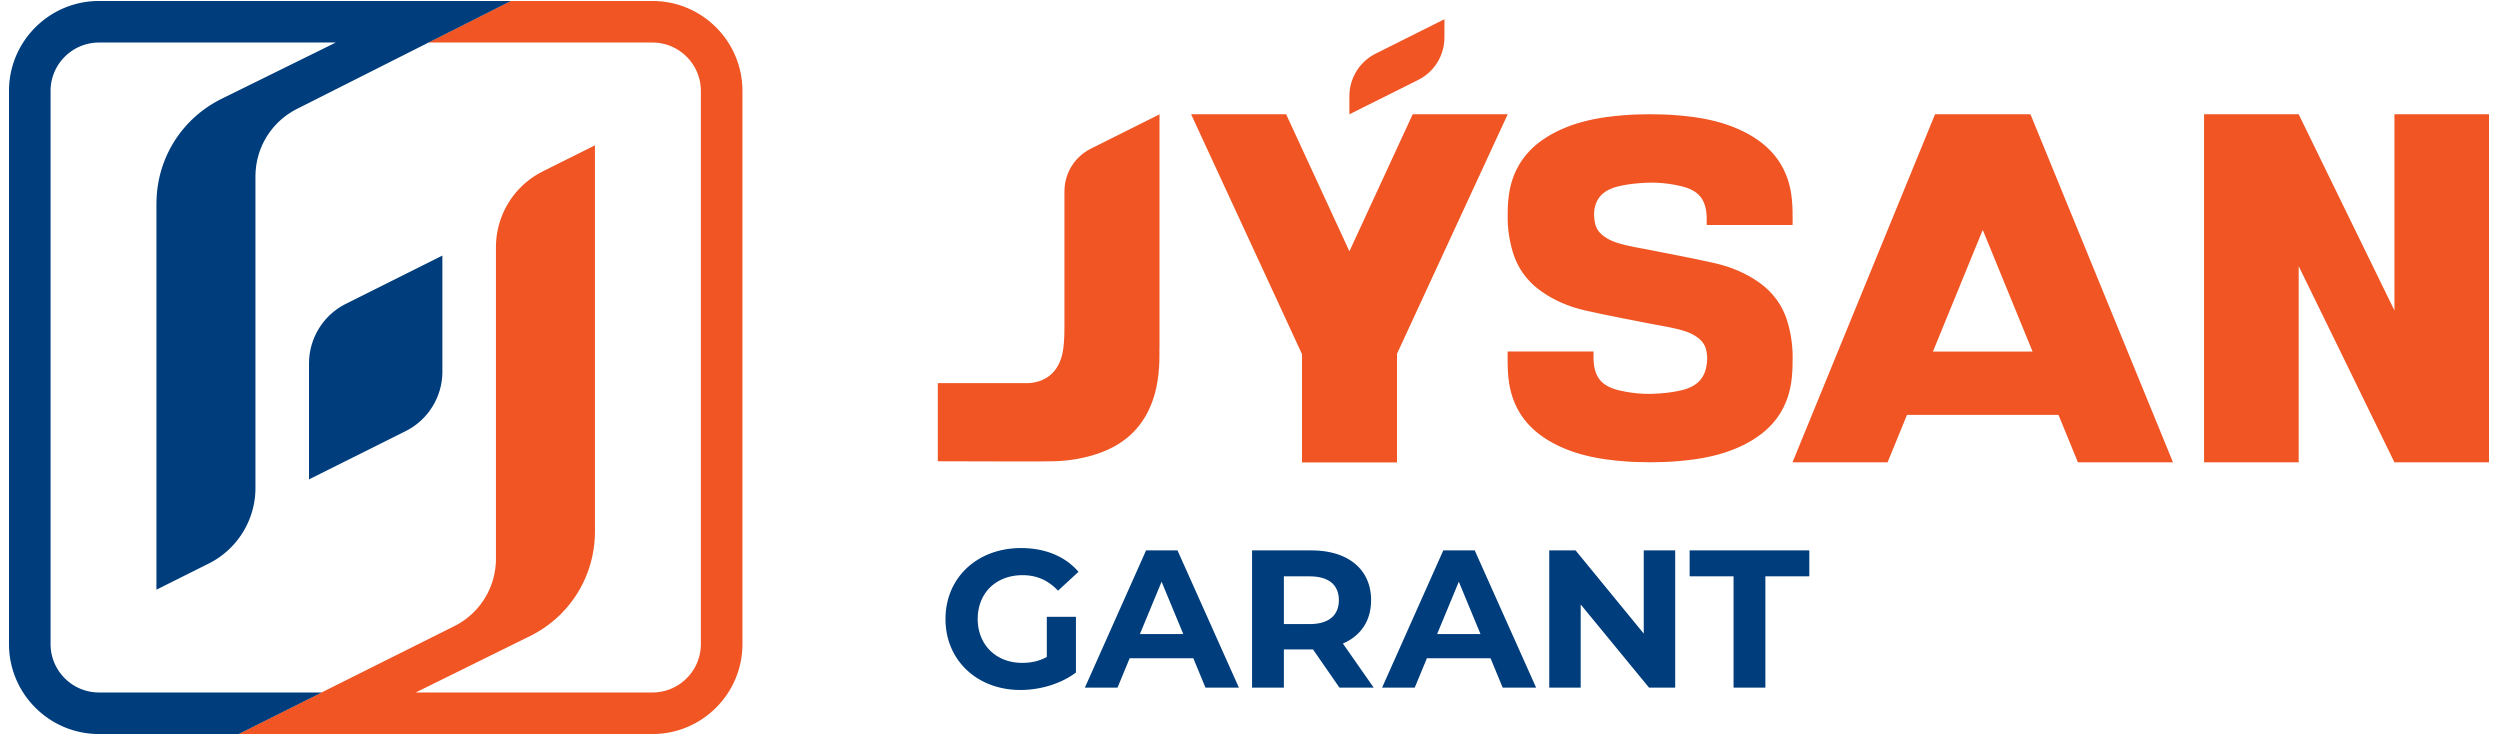 Jusan bank карта. Jusan Garant страховая. Лого Garant Bank. Jusan лого. Логотип Жусан банка.